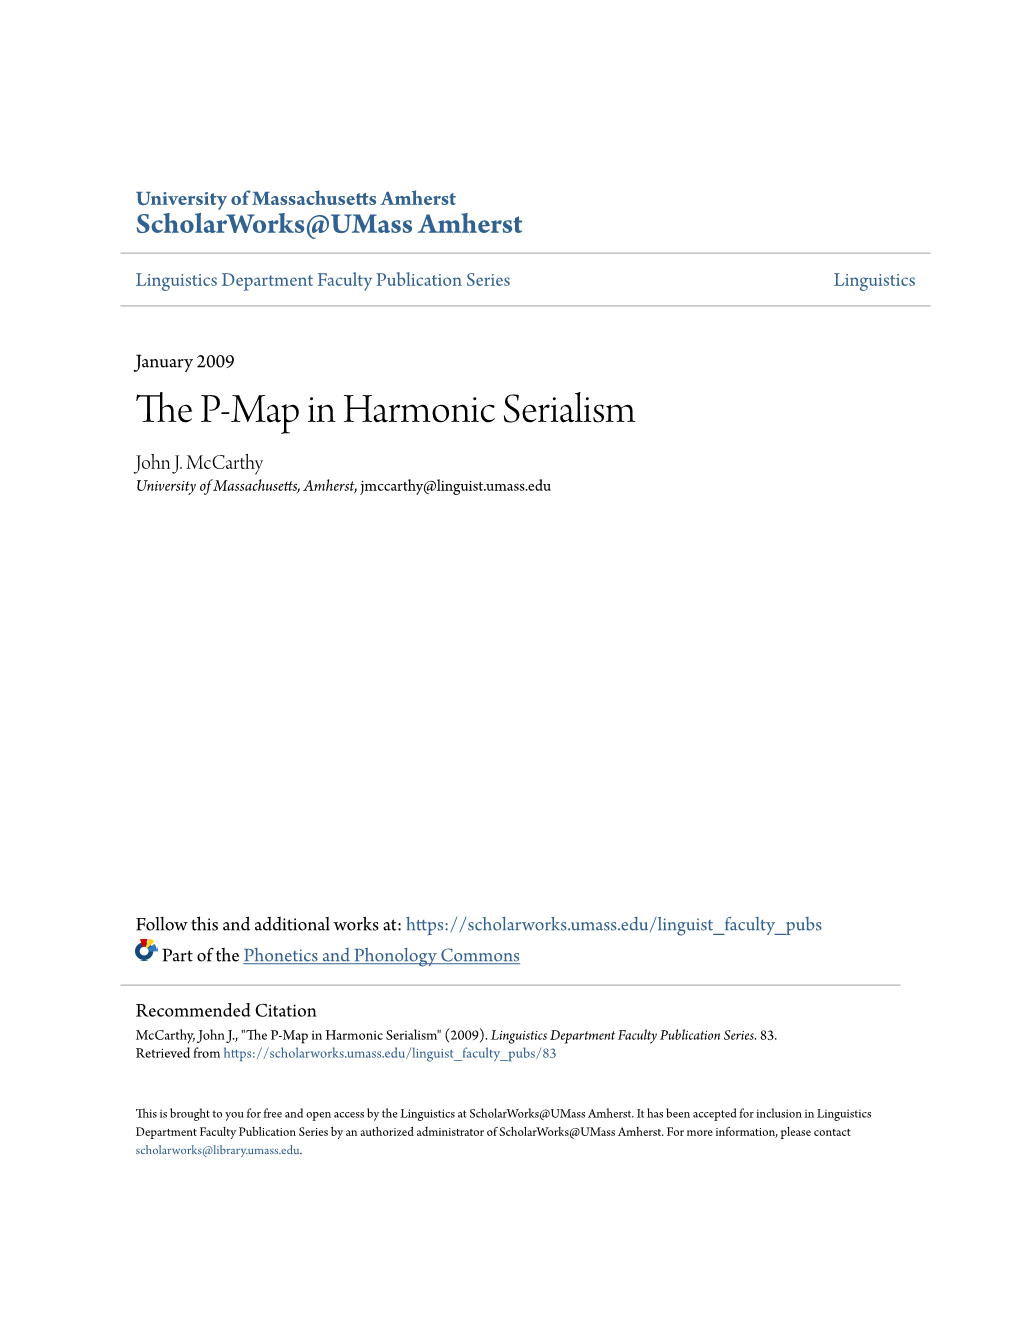 The P-Map in Harmonic Serialism1 John J